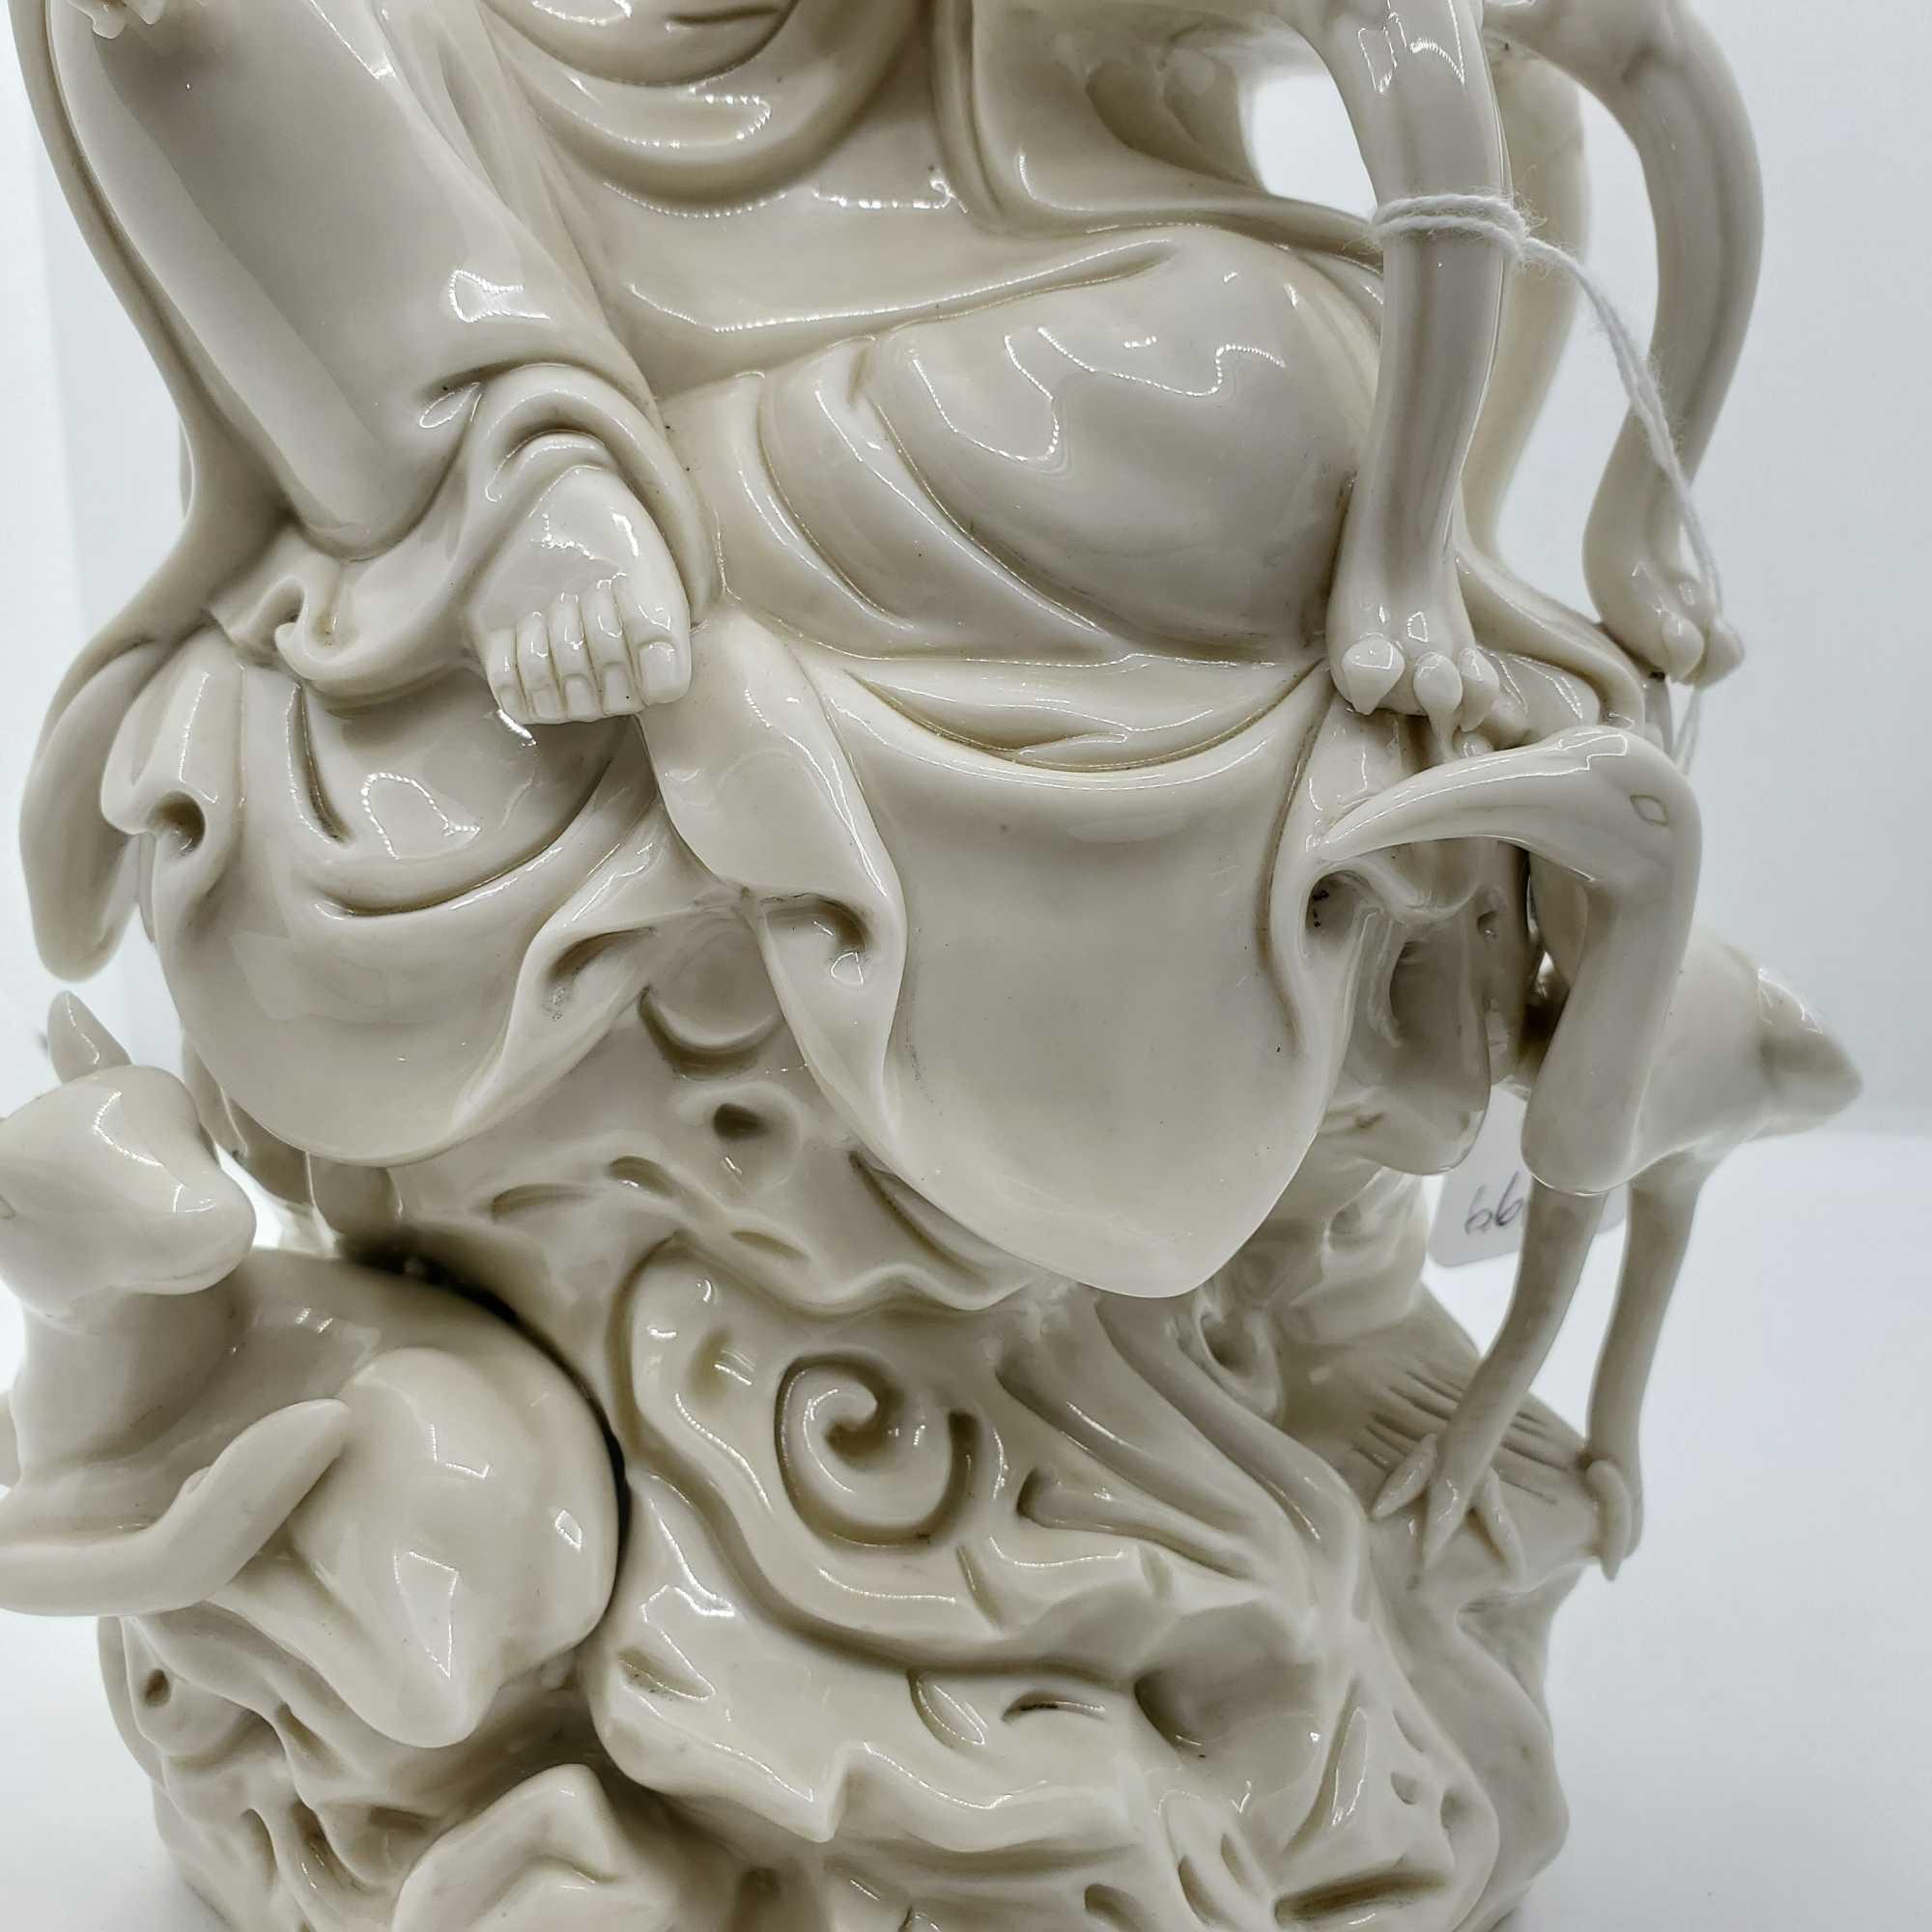 Chinese Blanc de Chine Porcelain Kuan Yin, Avalokitesvara Bodhisattva Seated in Meditation.